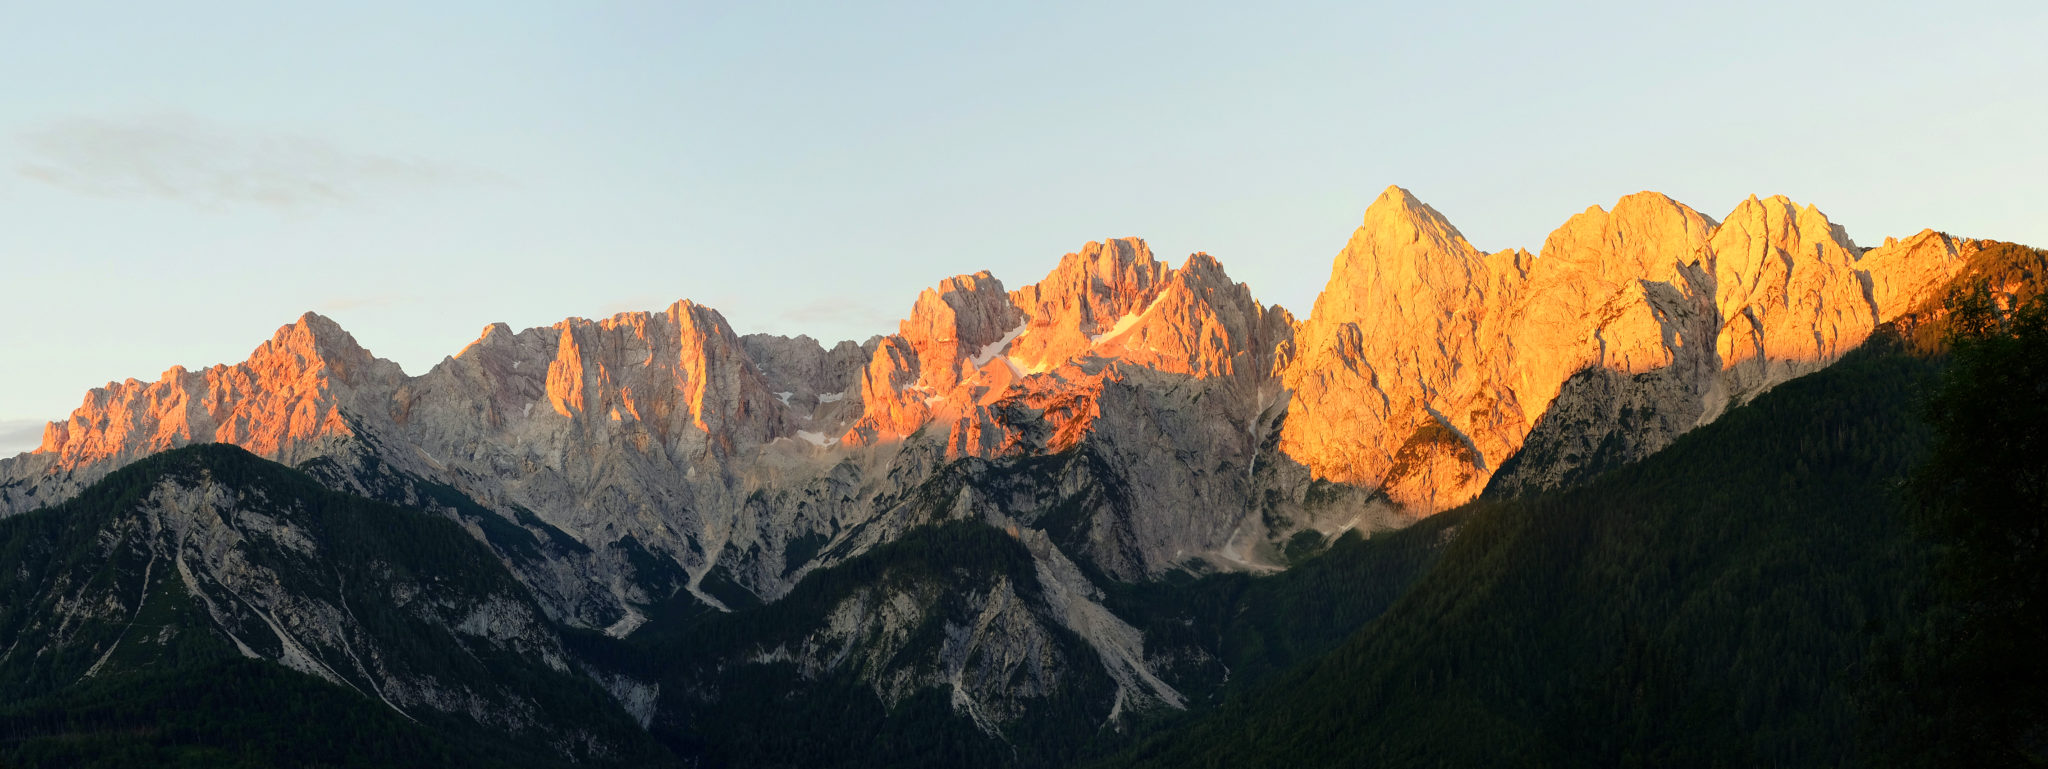 Martuljek Mountain Group for sunrise, Julian Alps